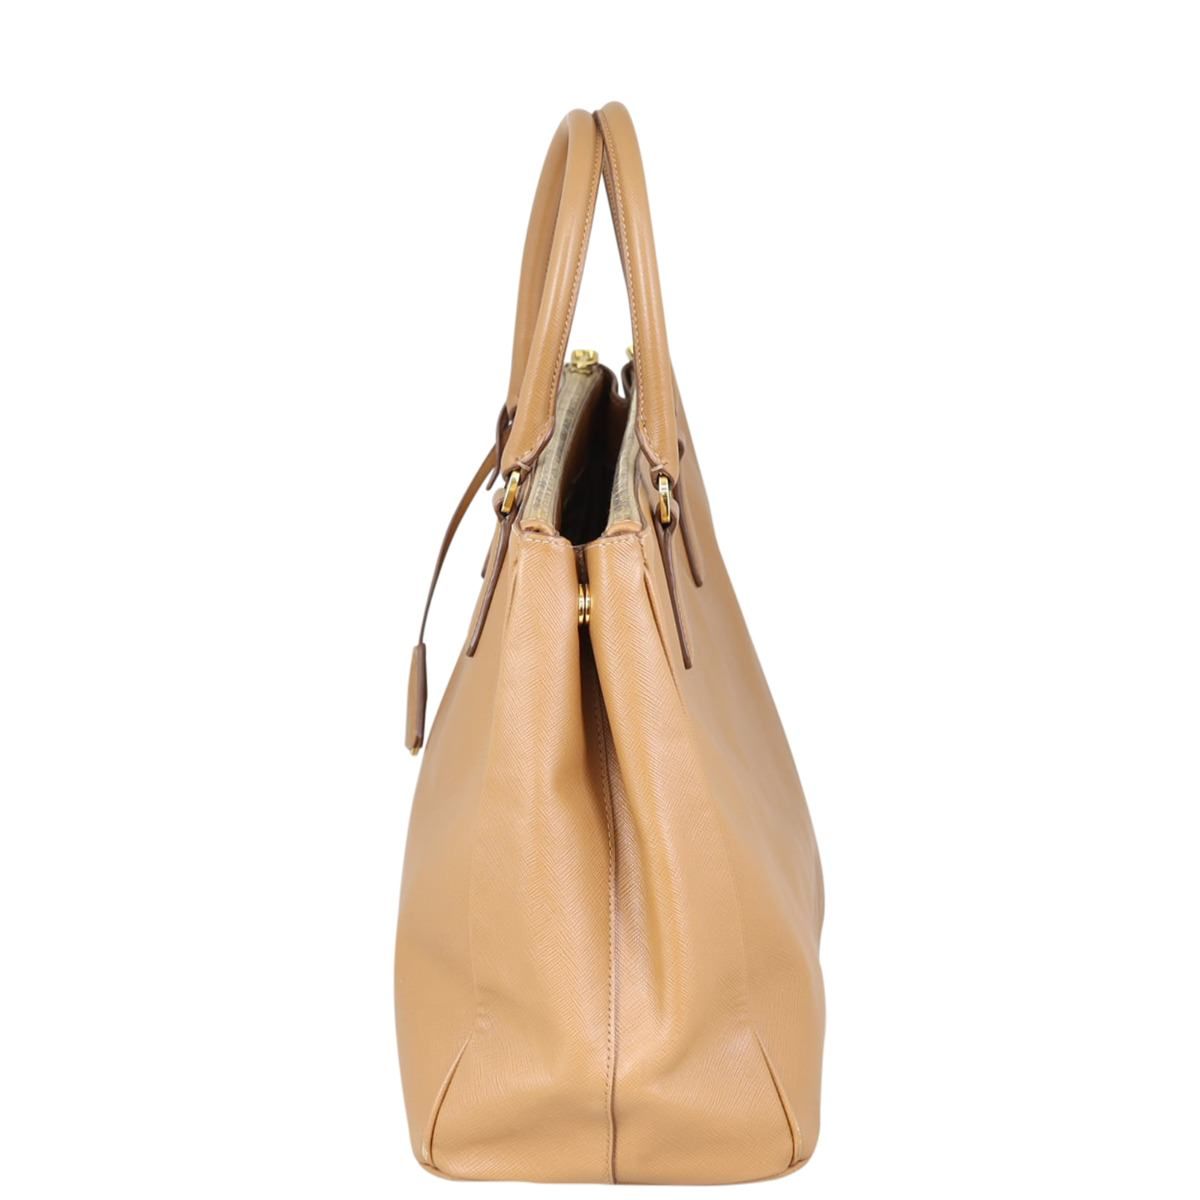 PRADA Double Tote Bag in Brown Saffiano Leather